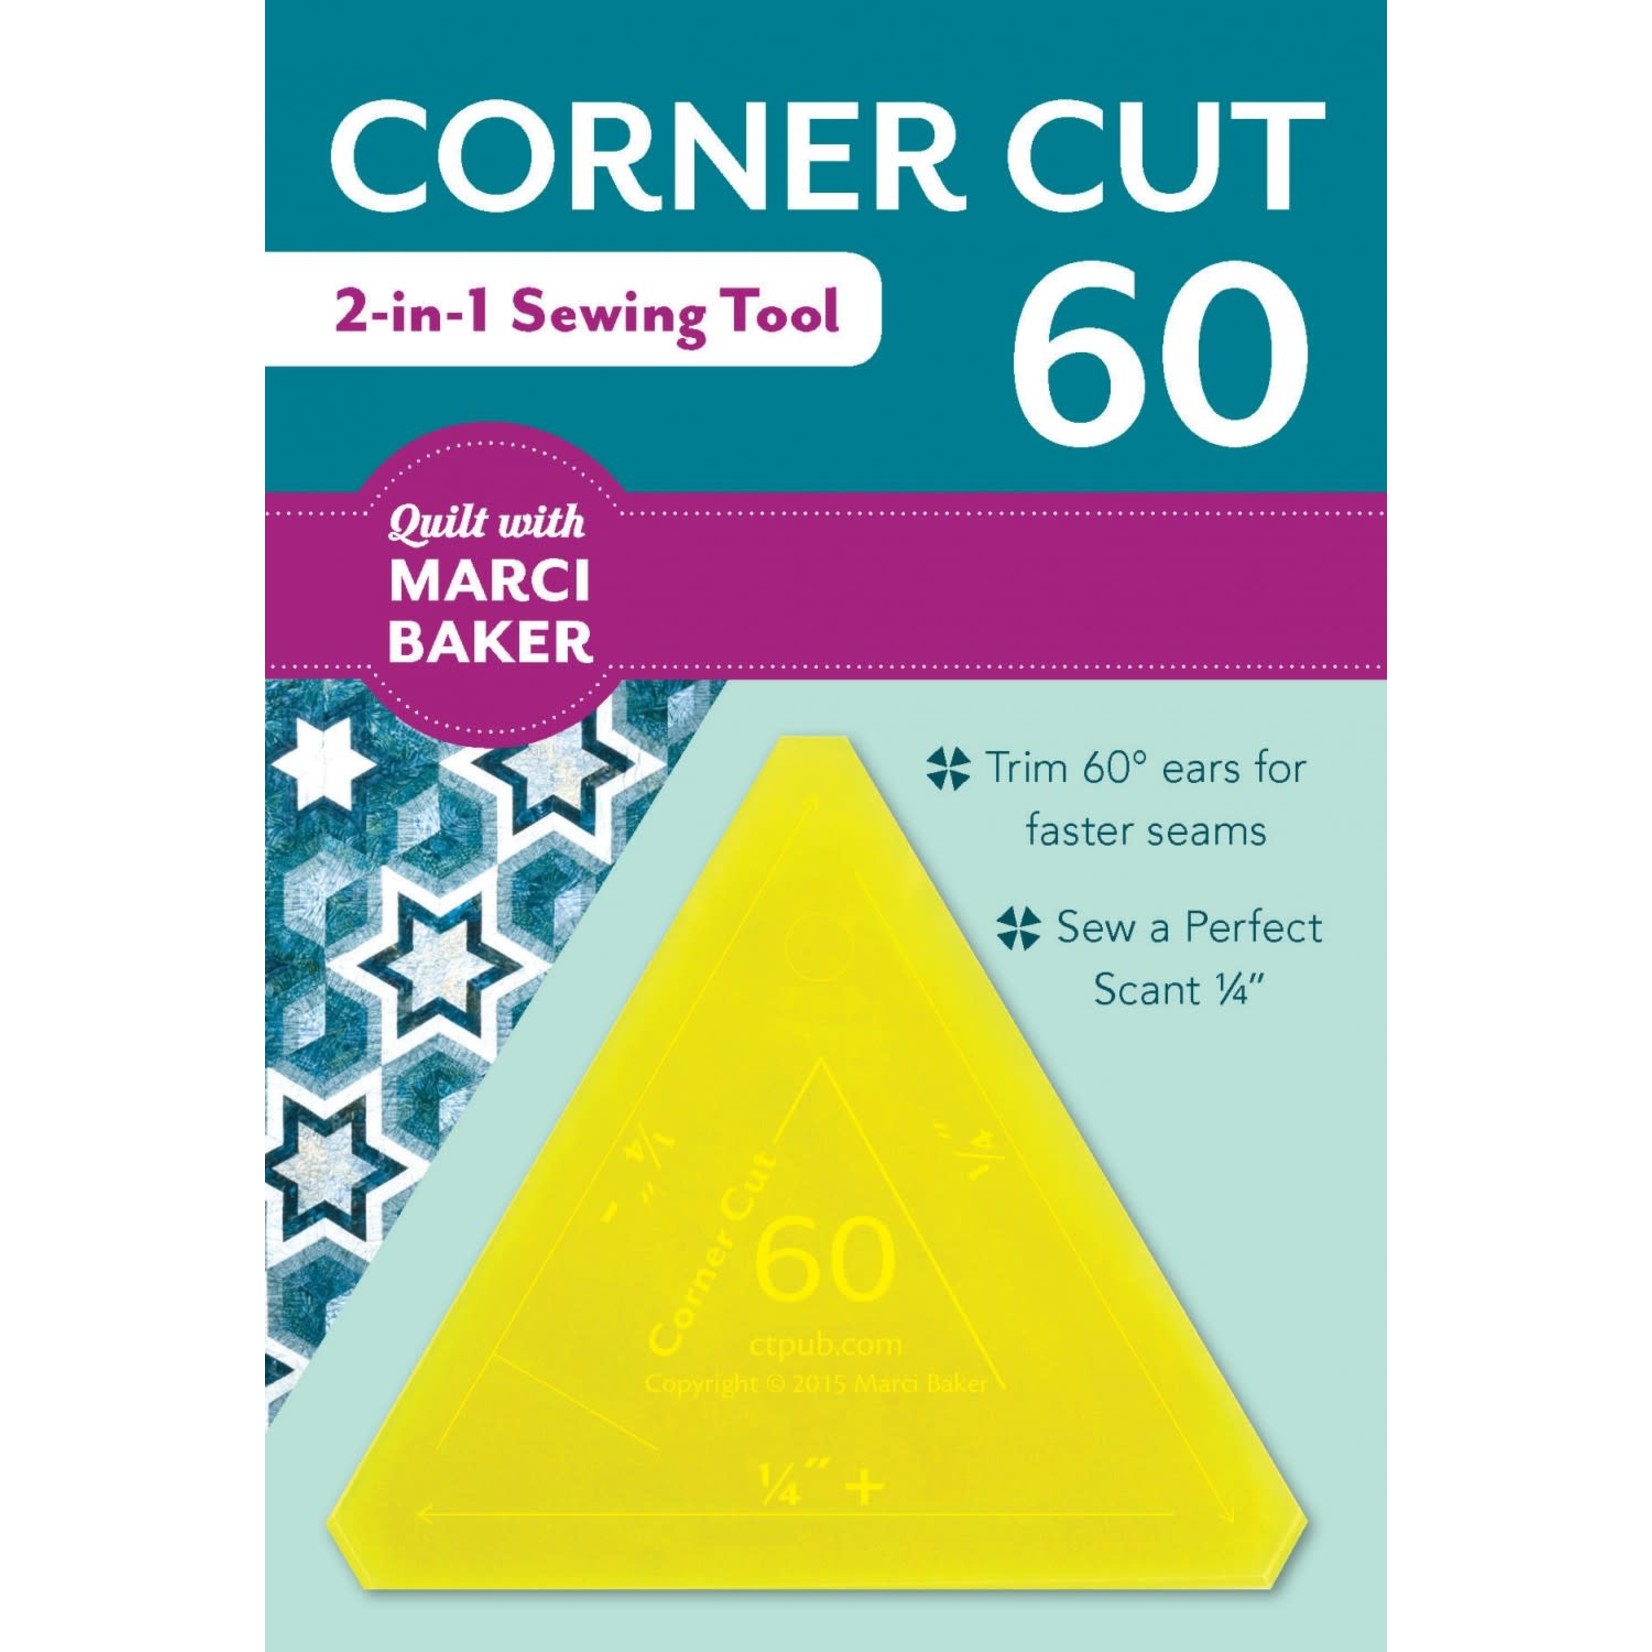 Marci Baker Corner Cut 60 - 2-in-1 Sewing Tool